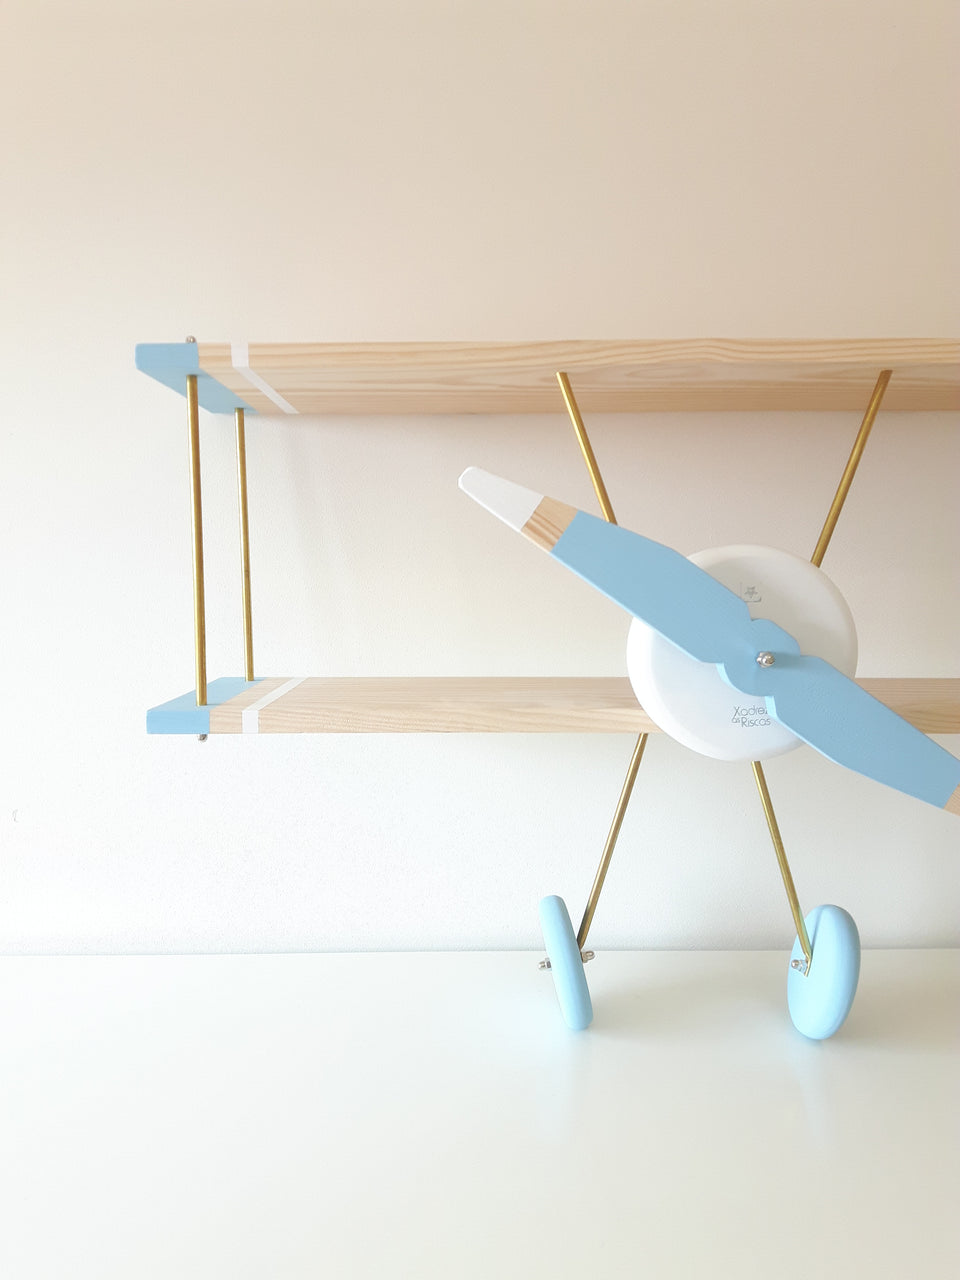 Prateleira Avioneta Azul Bebe - Baby Blue Airplane Shelf